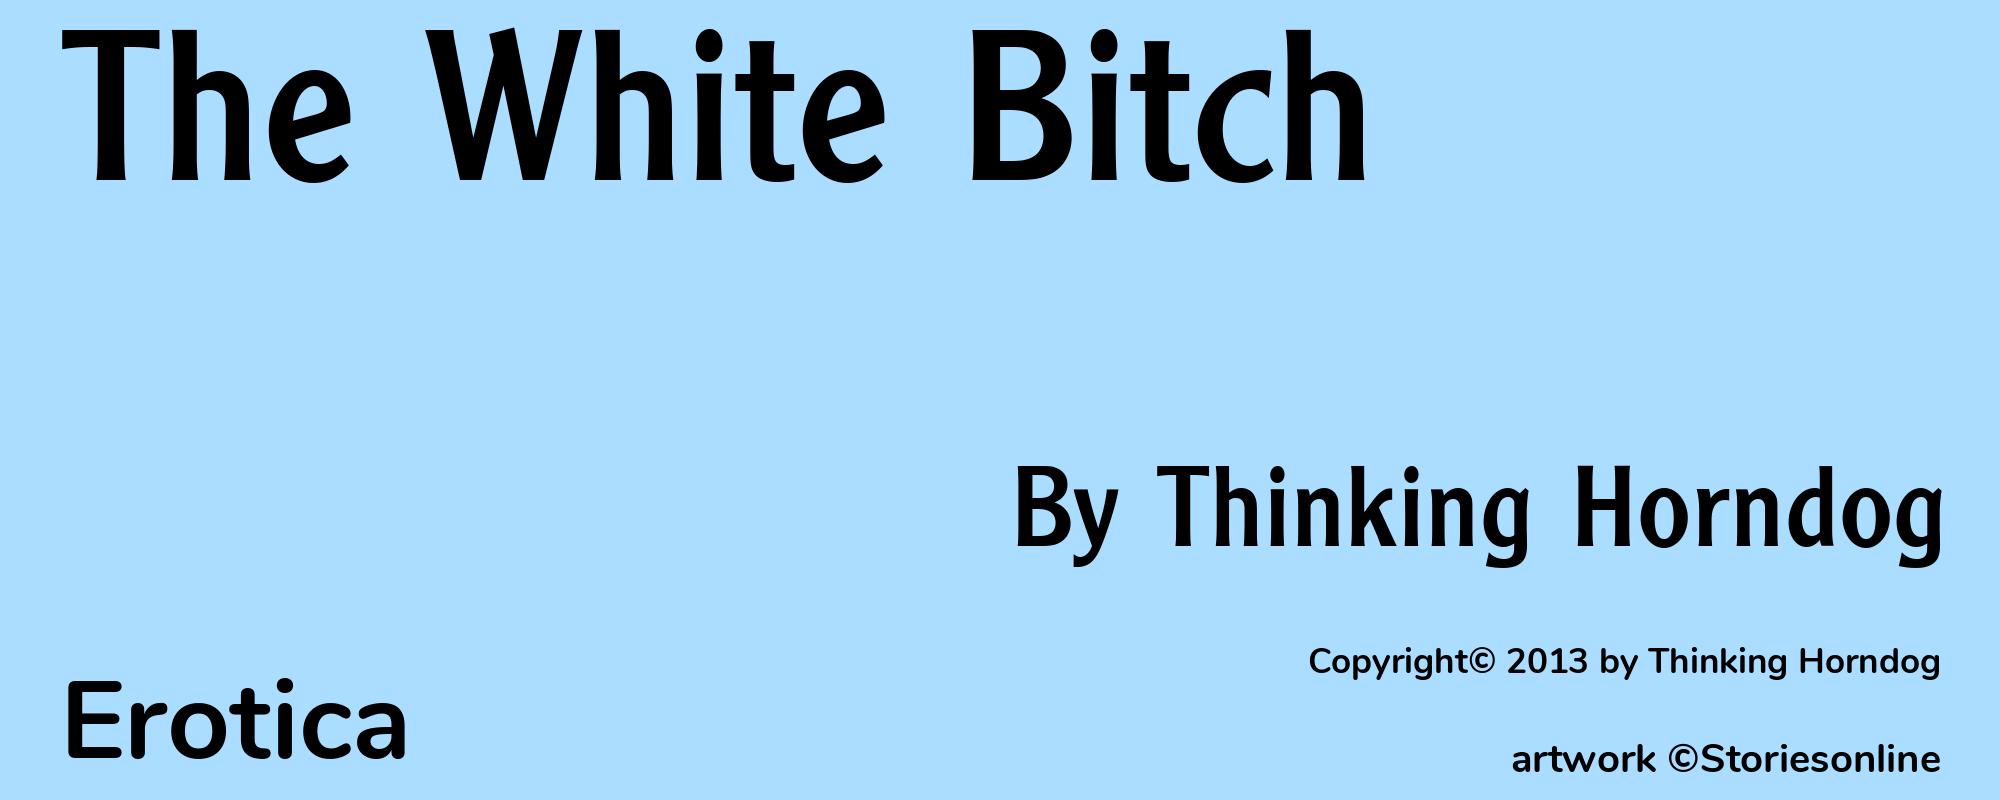 The White Bitch - Cover